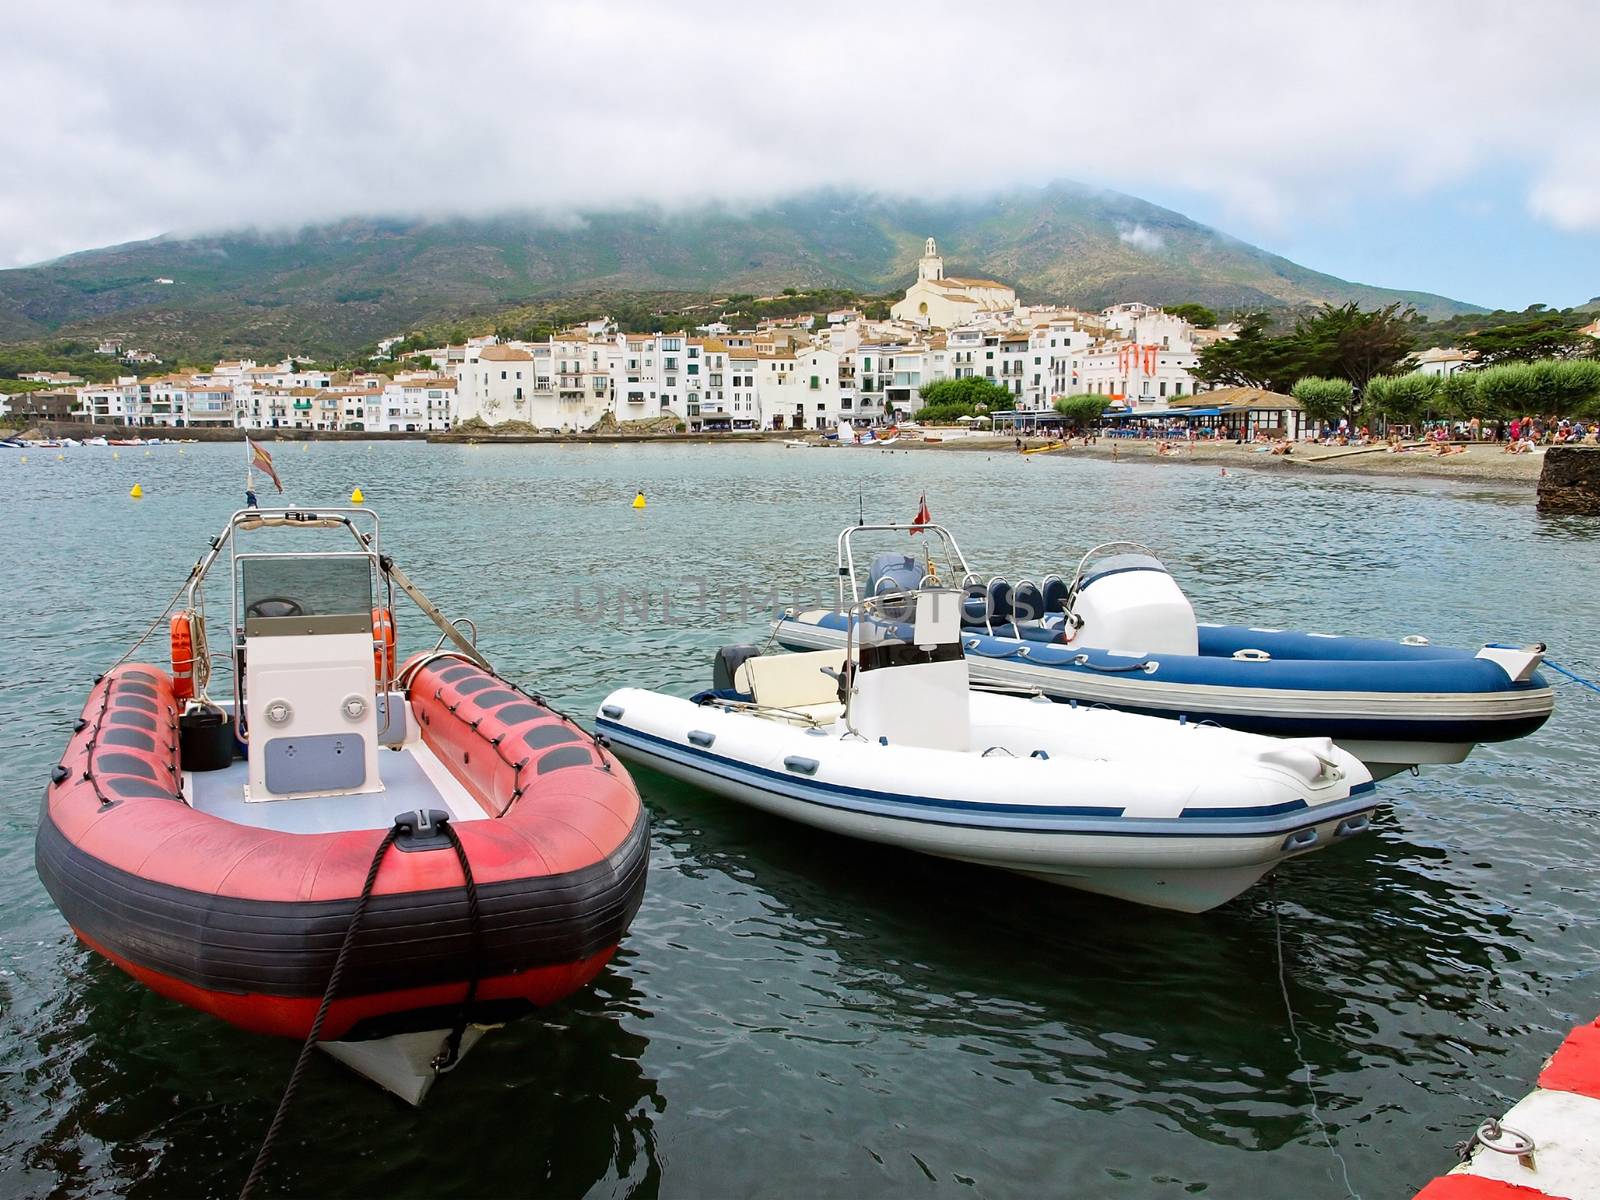 Inflatable motor boats in Cadaques, Costa Brava, Catalonia, Spain.